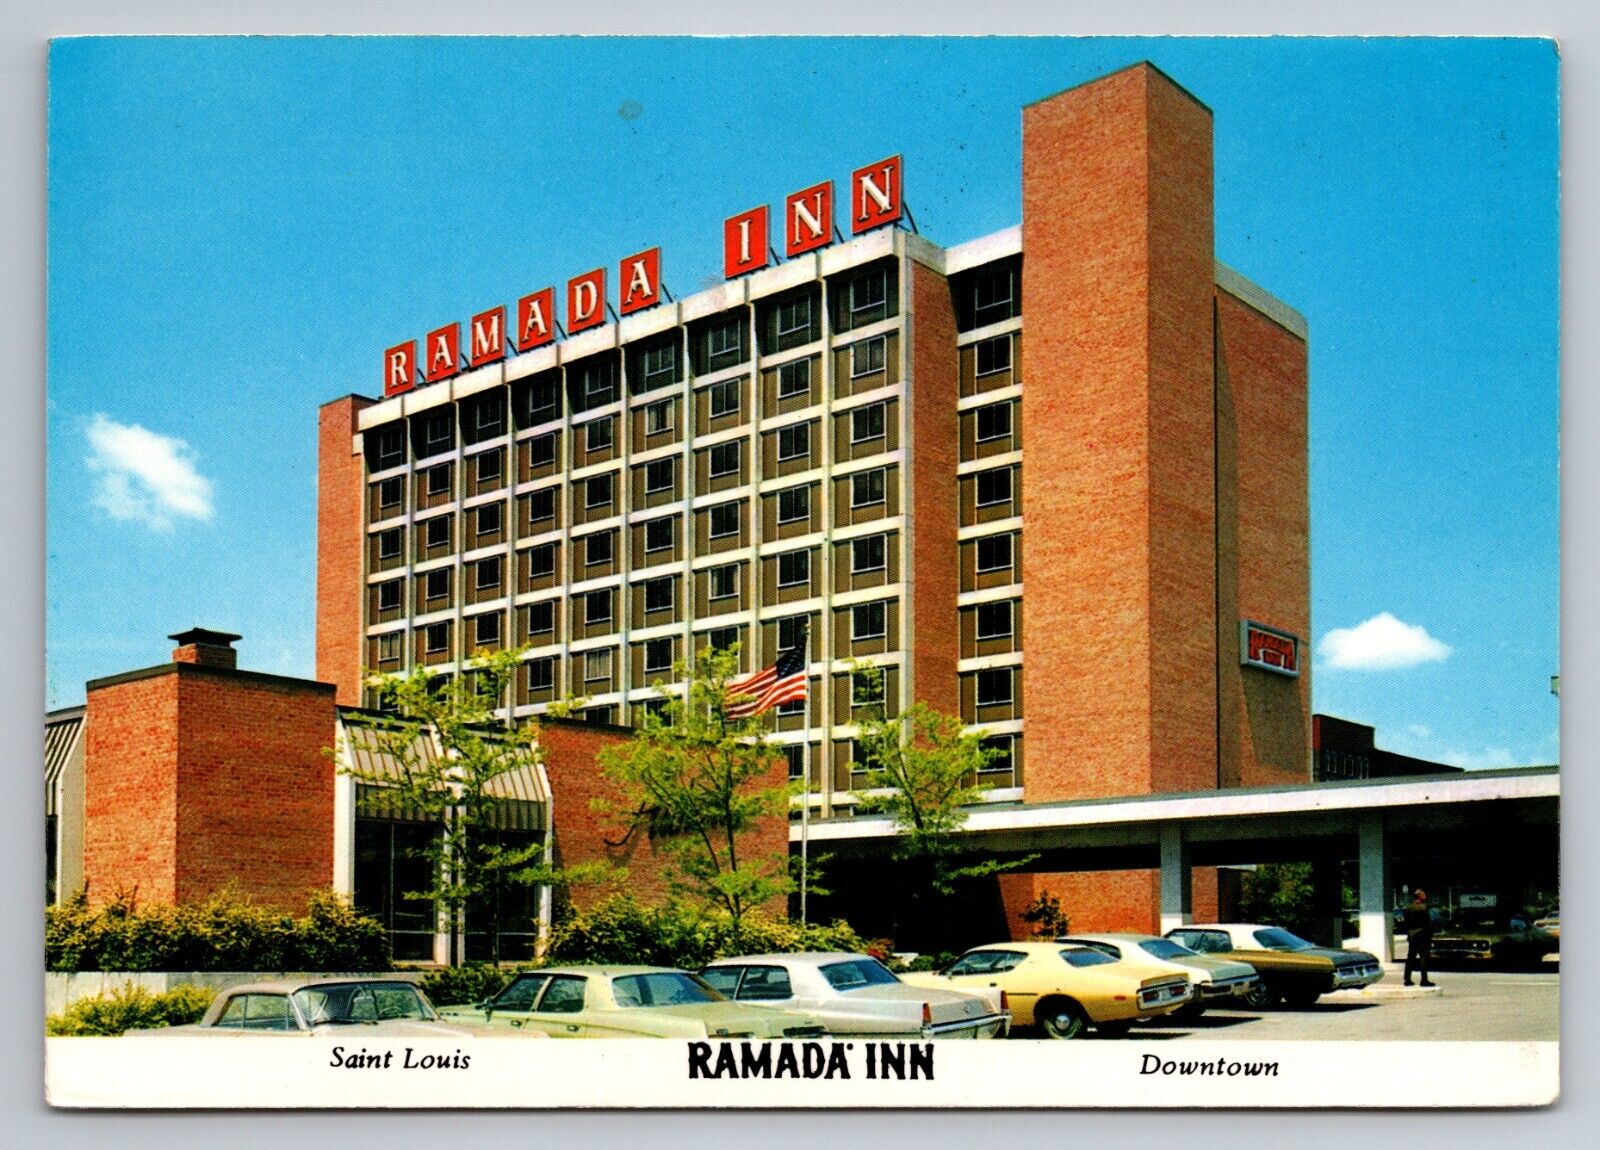 Ramada Inn Downtown St. Louis Missouri Vintage Unposted Postcard